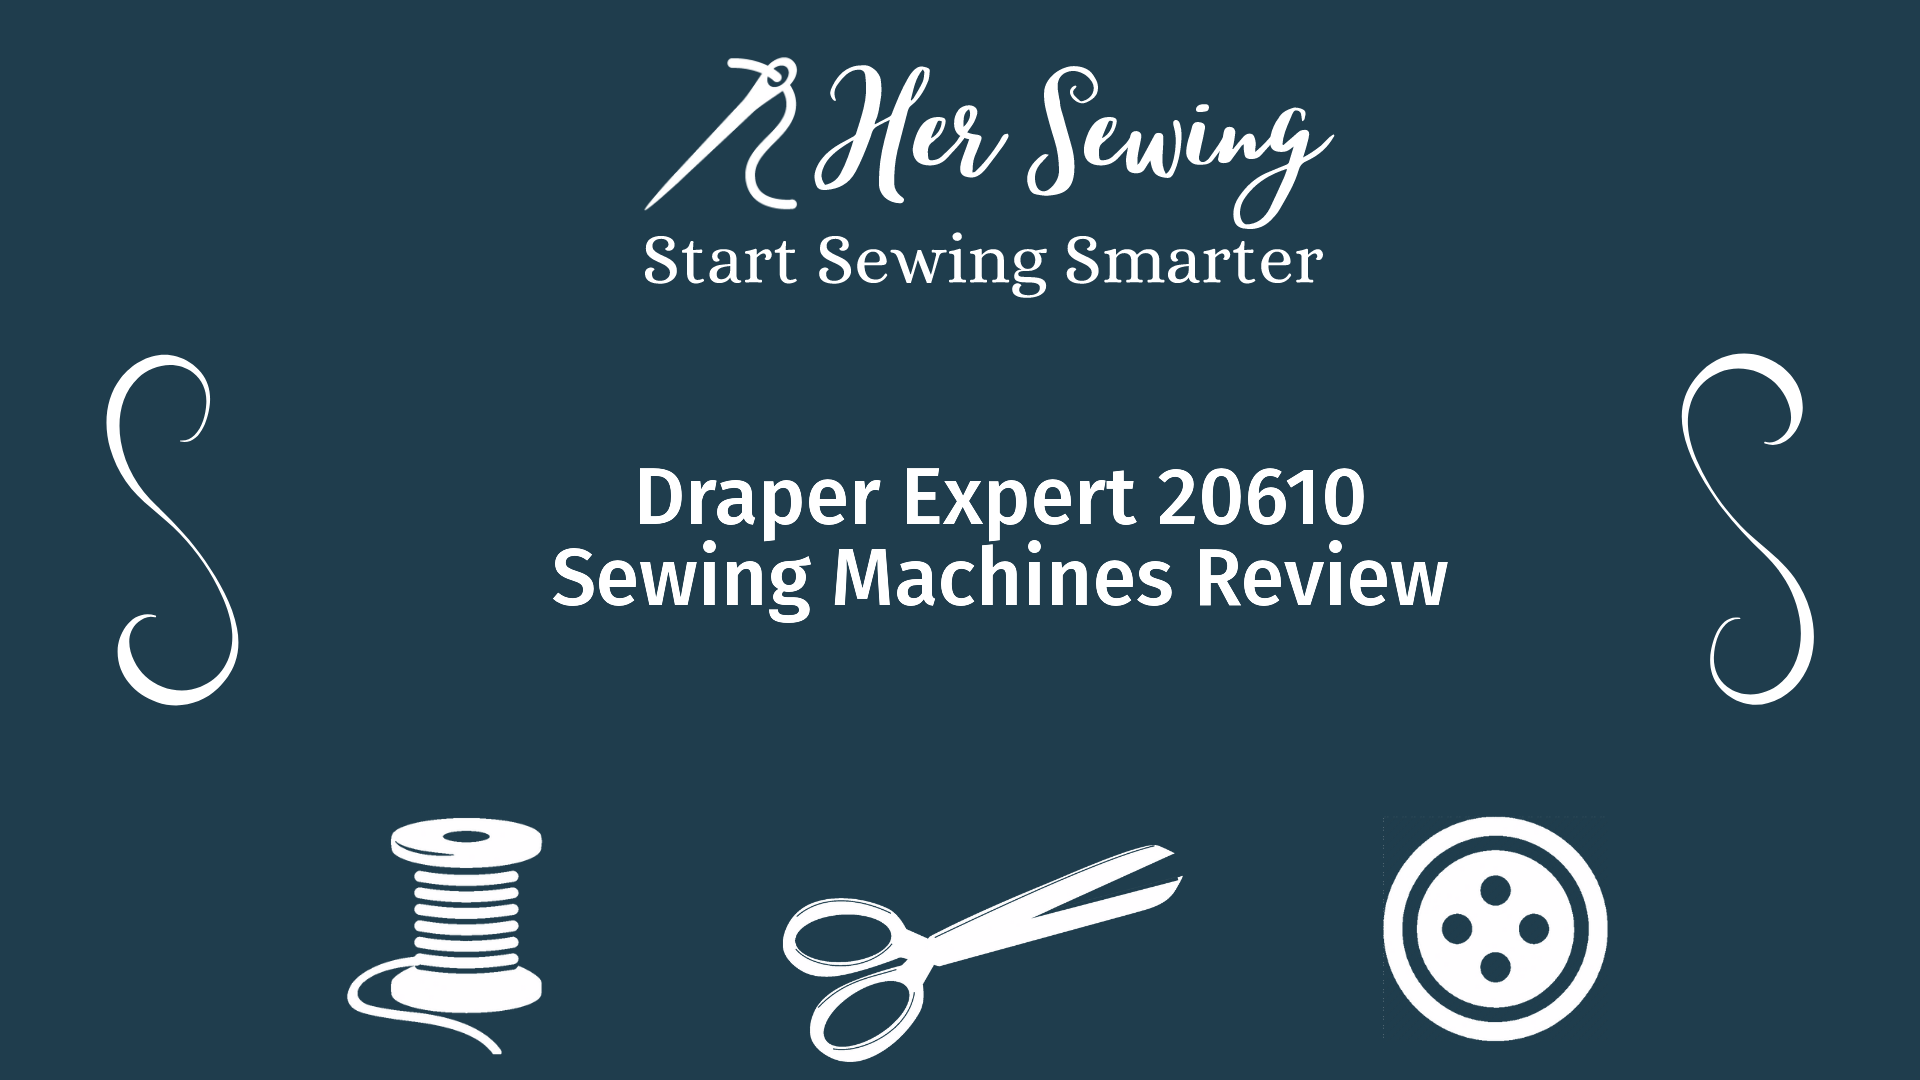 Draper Expert 20610 Sewing Machines Review